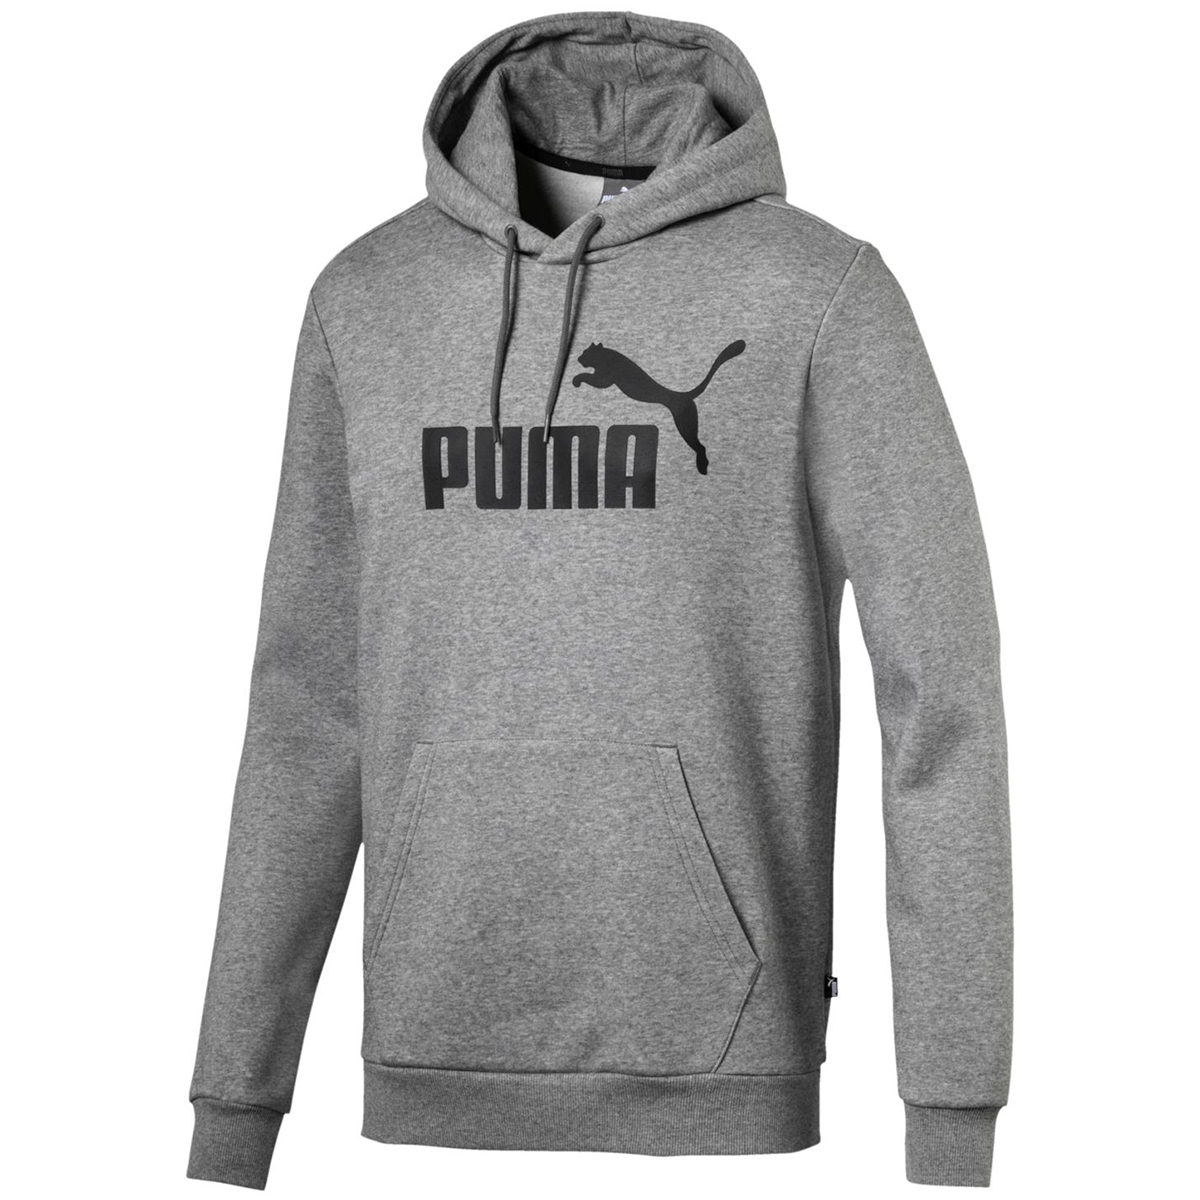 Puma Men's Essentials Fleece Pullover Hoodie - Black, M